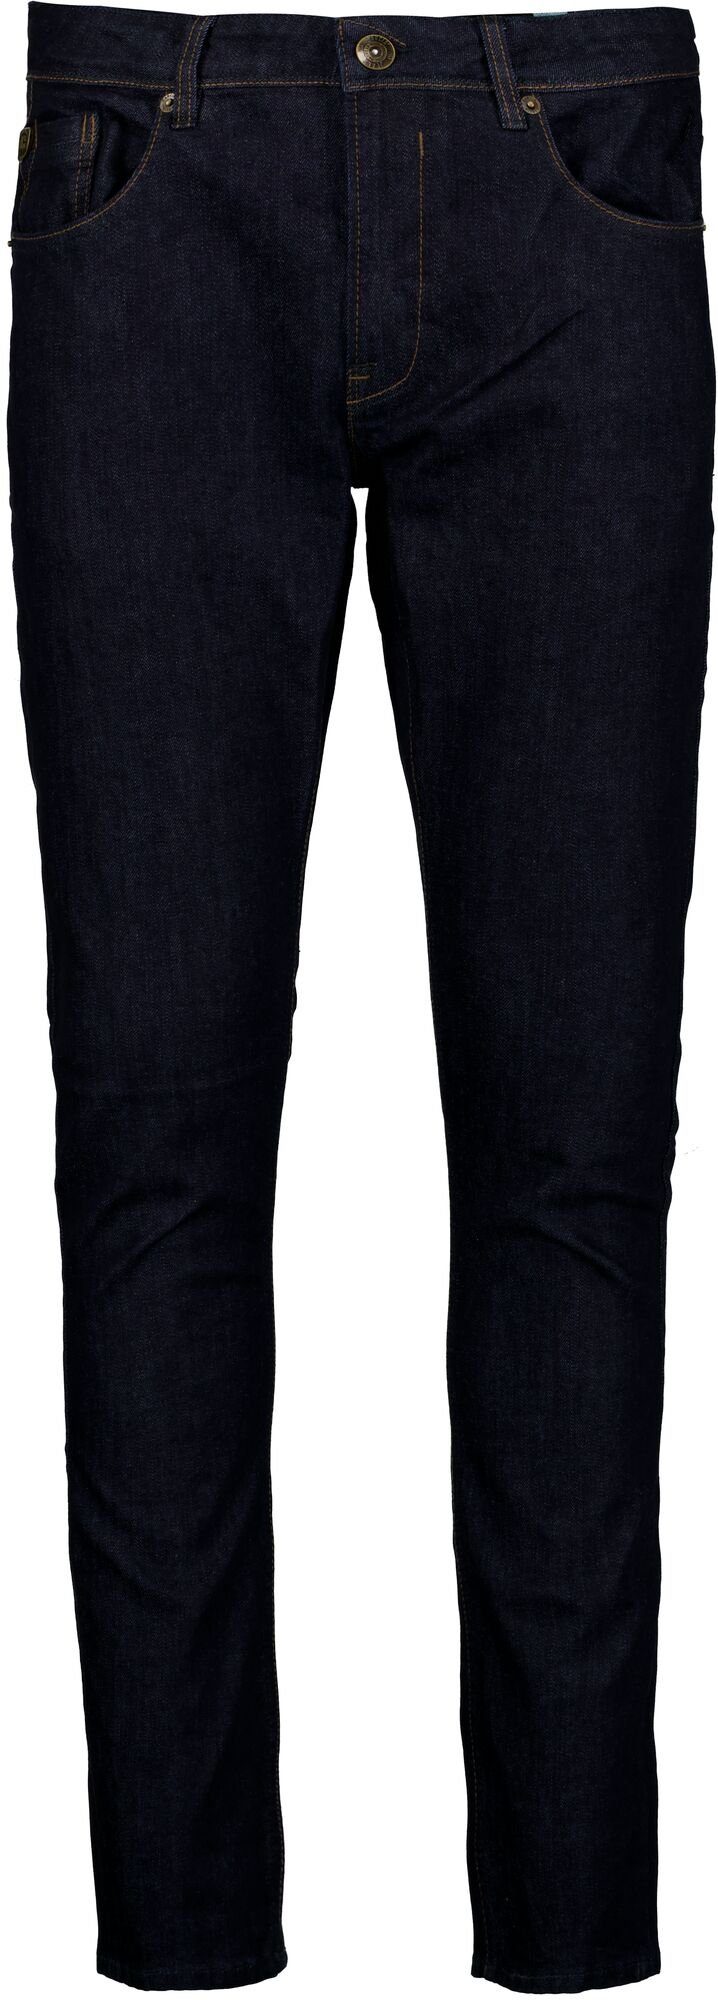 GARCIA JEANS 5-Pocket-Jeans GARCIA SAVIO deep blue rinsed 630.5332 - Motion Denim